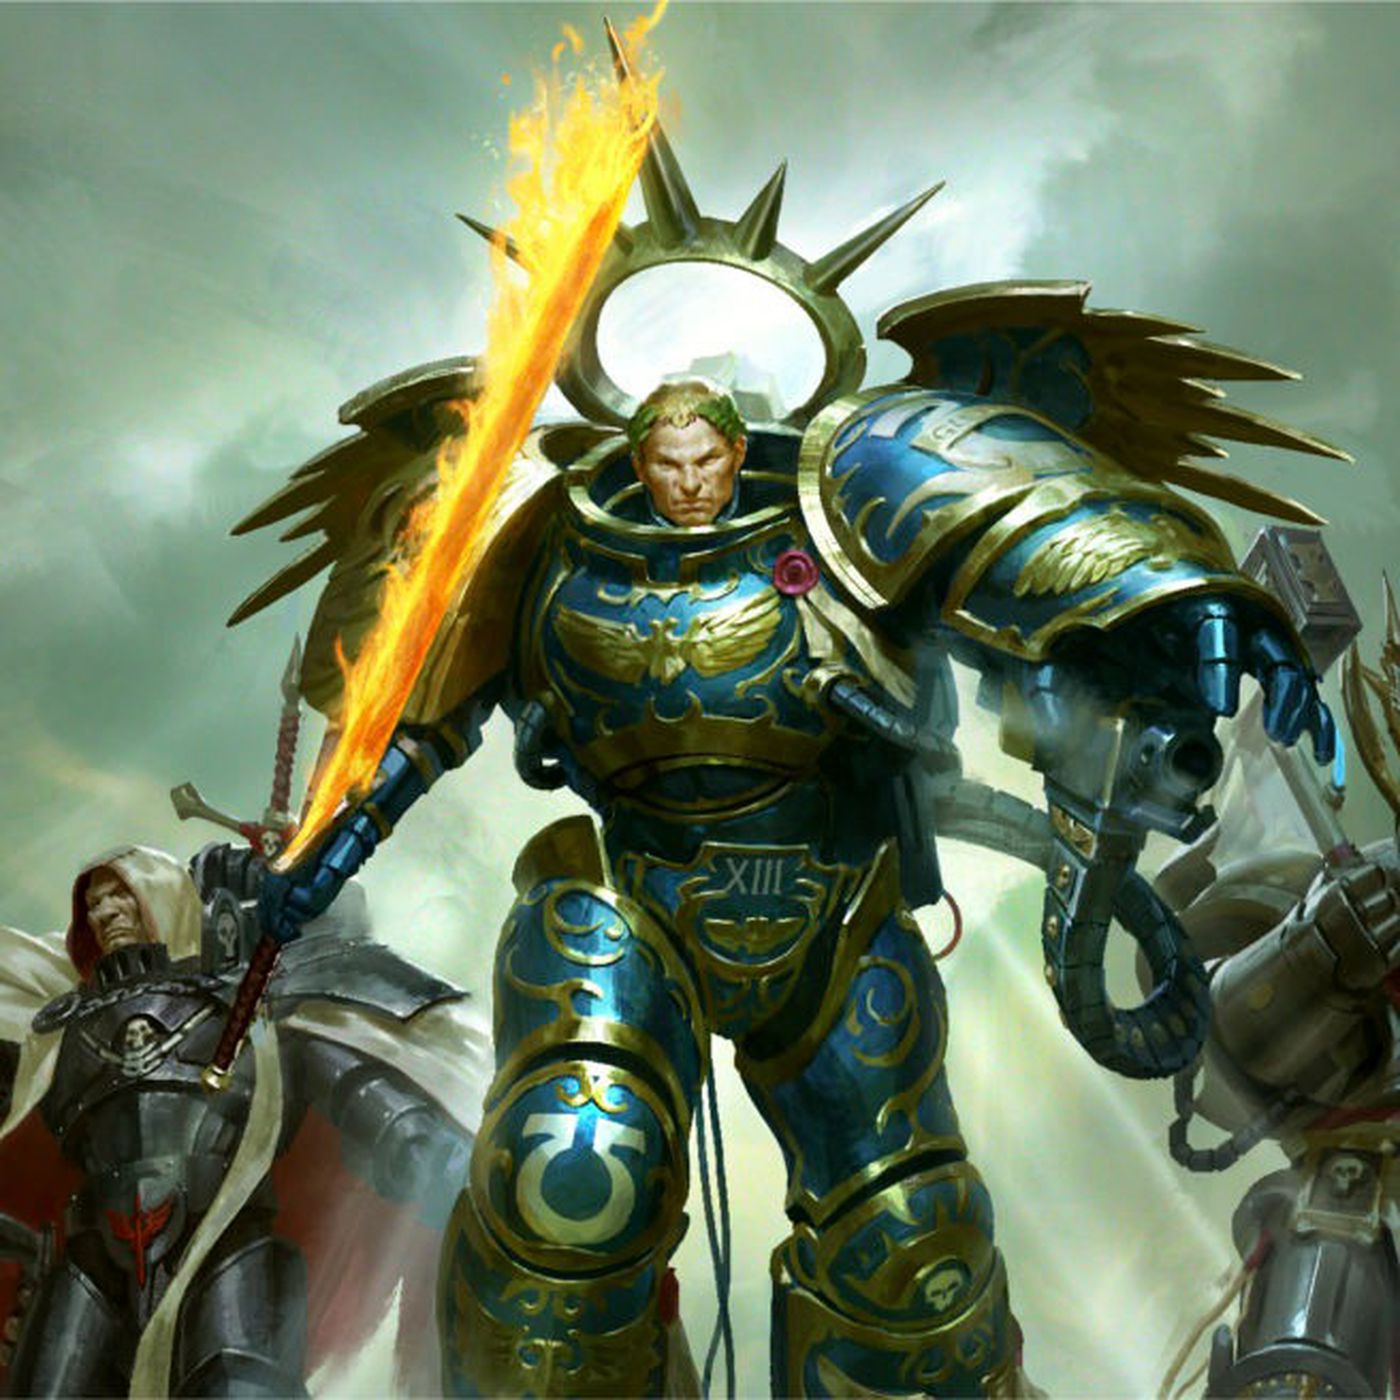 Warhammer 40k Characters: Legends in a Dark Galaxy